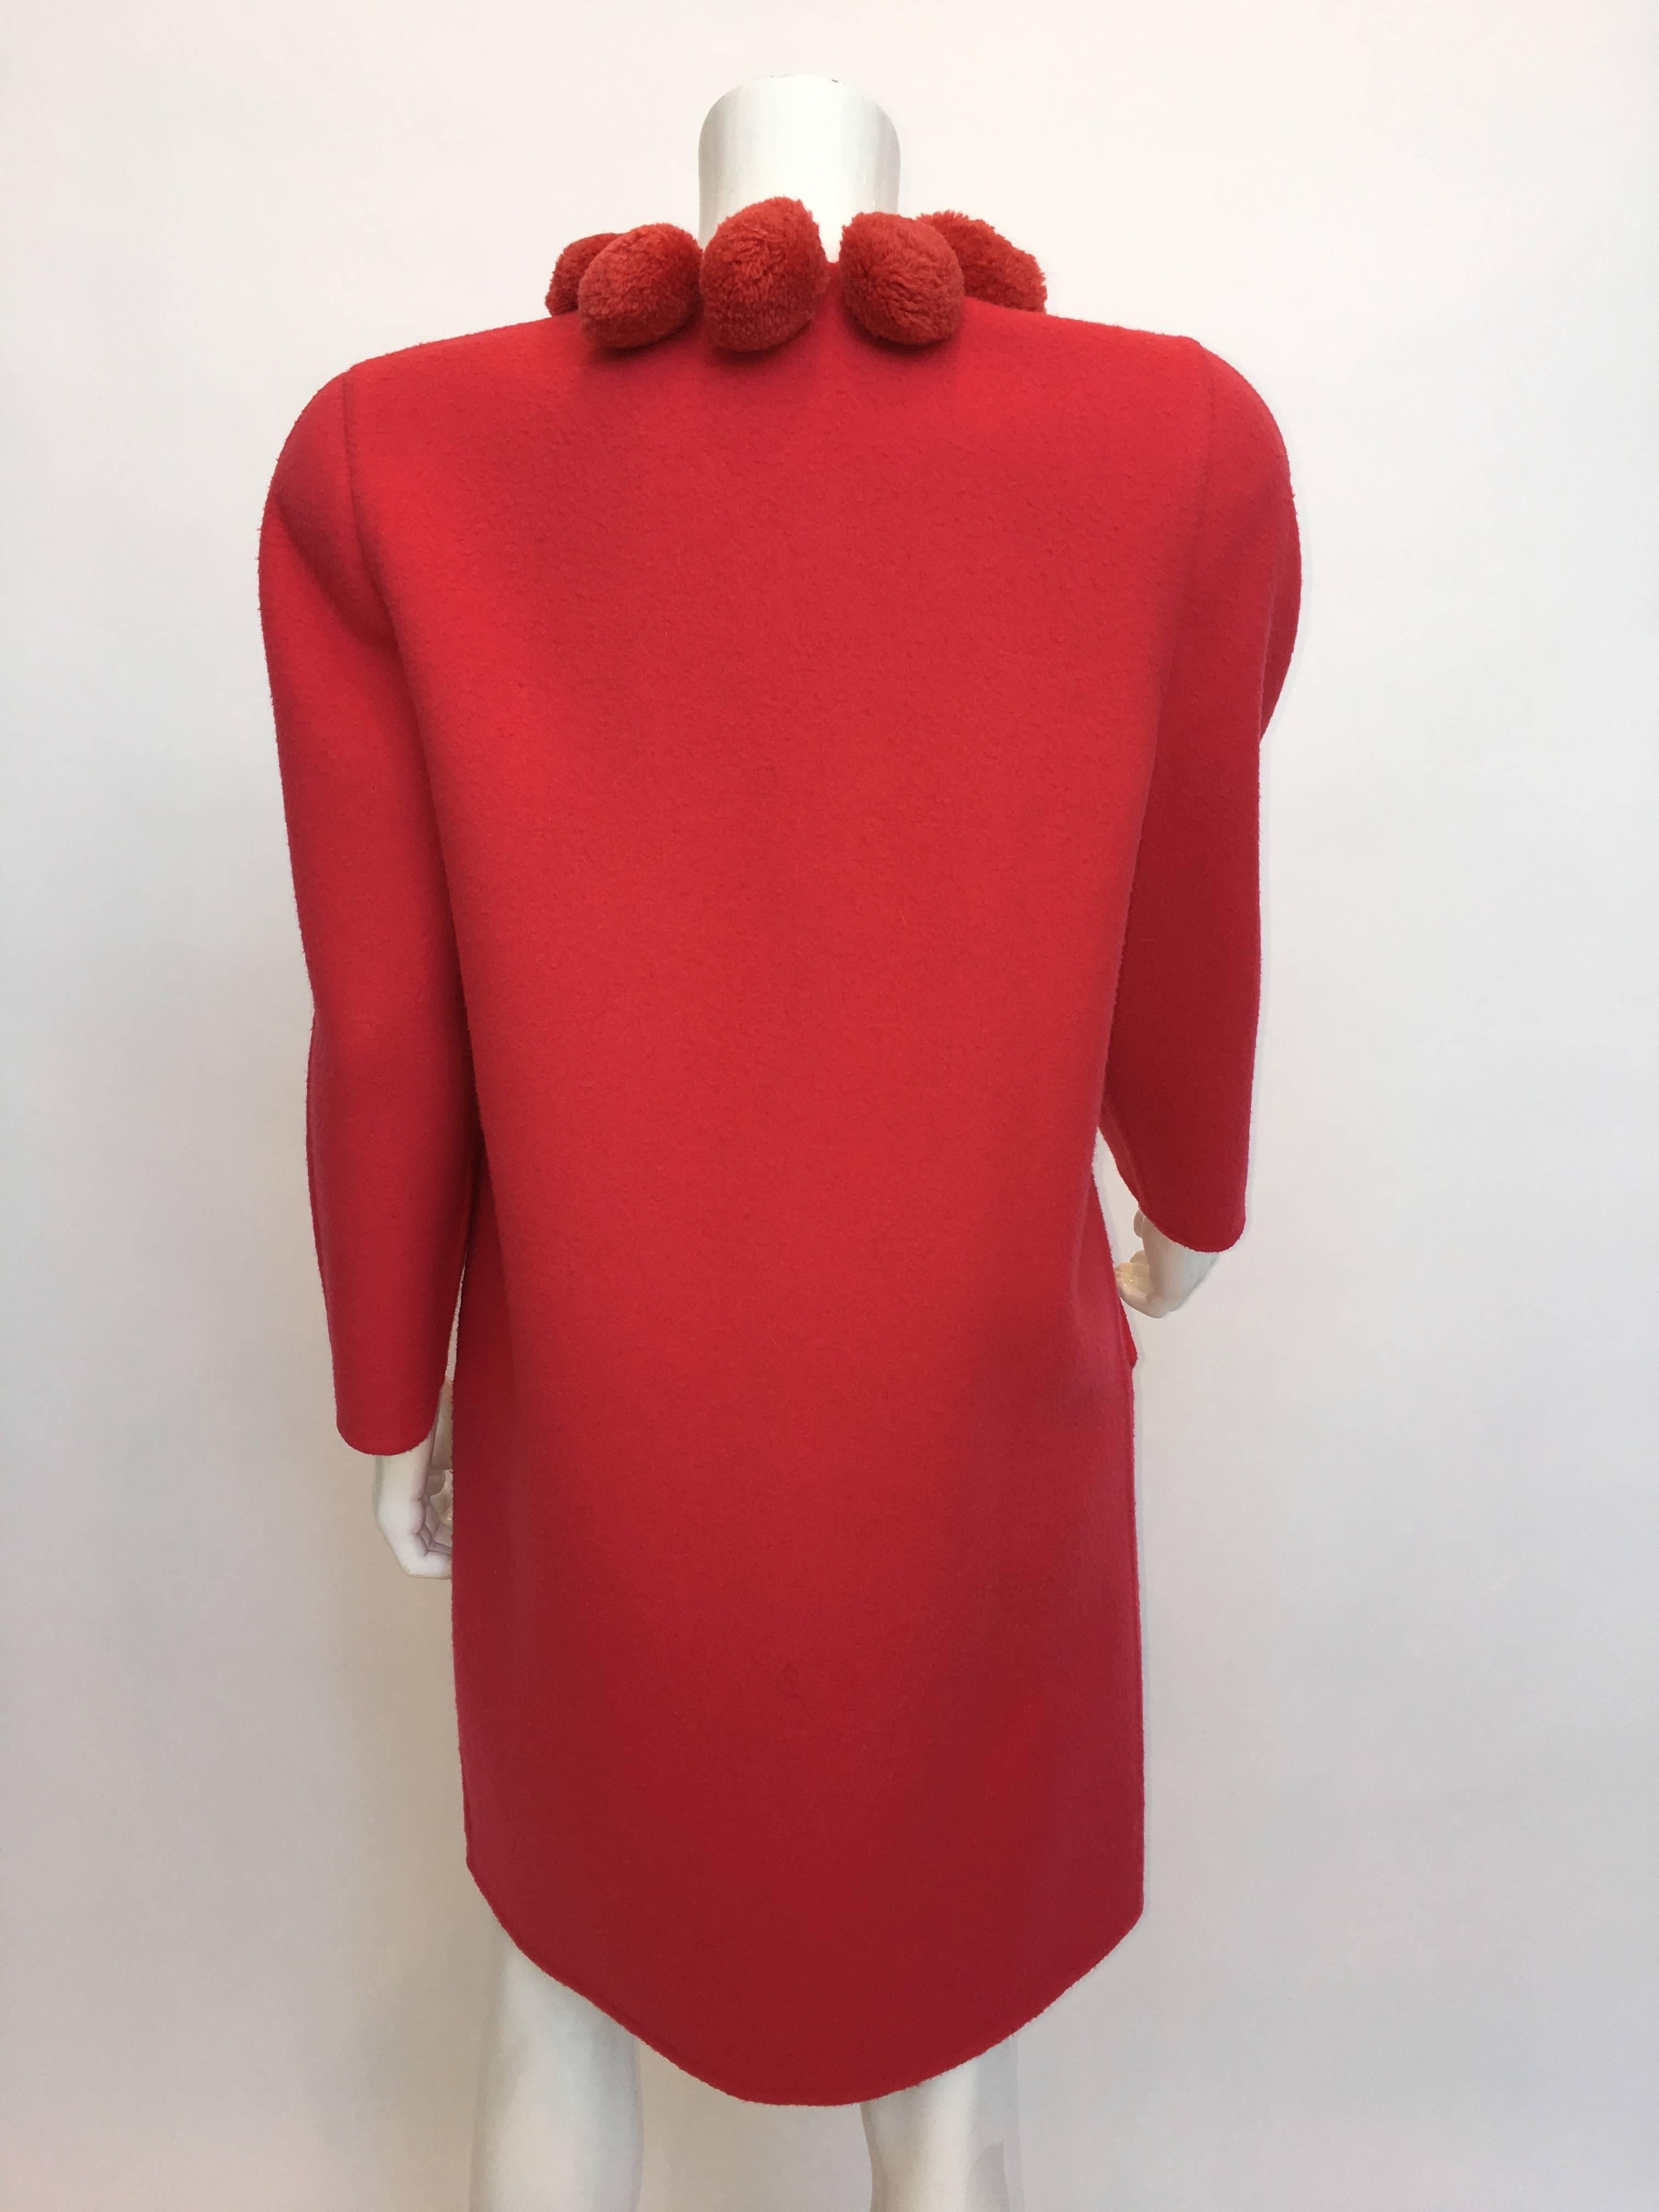 Bill Blass 1980's Pink Coral 100% Wool Coat with Pom Poms. Coat has shoulder pads, 2 front side pockets and snap closures.

*ALL MEASUREMENTS TAKEN FLAT*
Size Label: 6

Shoulder to shoulder: 16